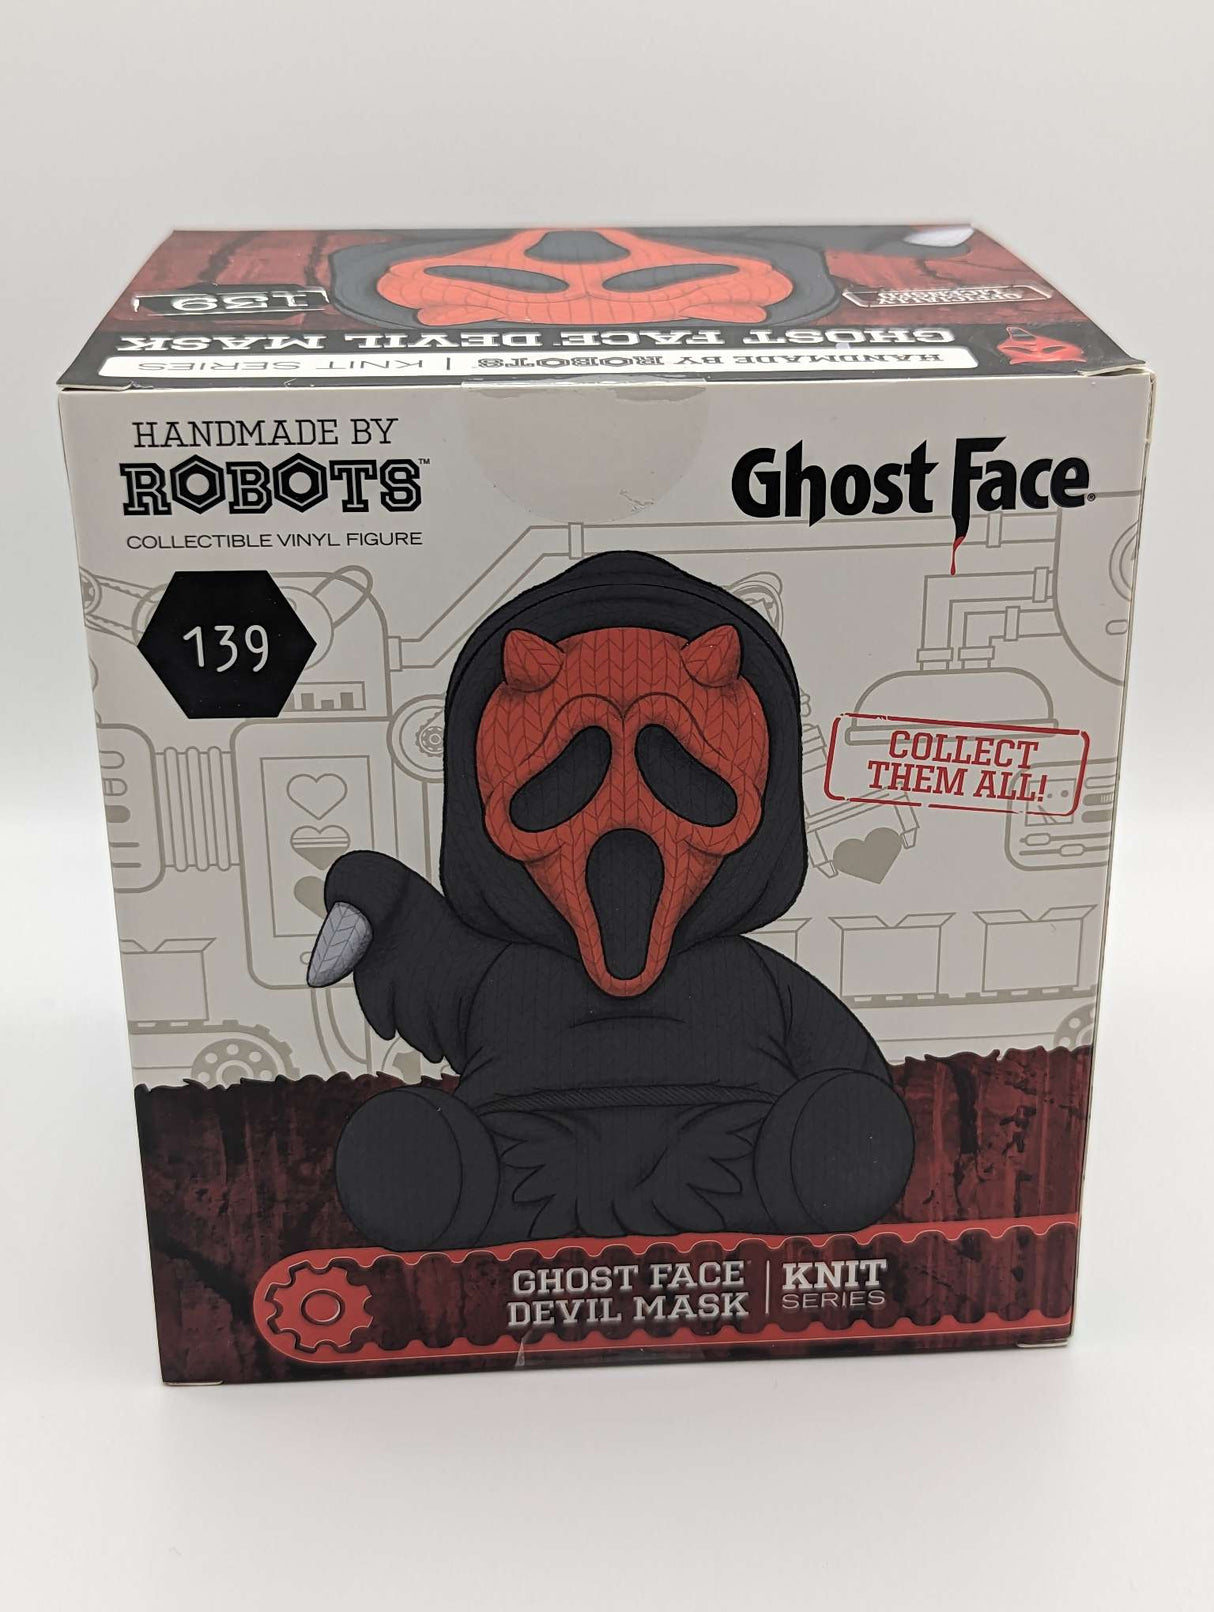 Ghost Face Devil Mask – Handmade by Robots Vinyl Figures